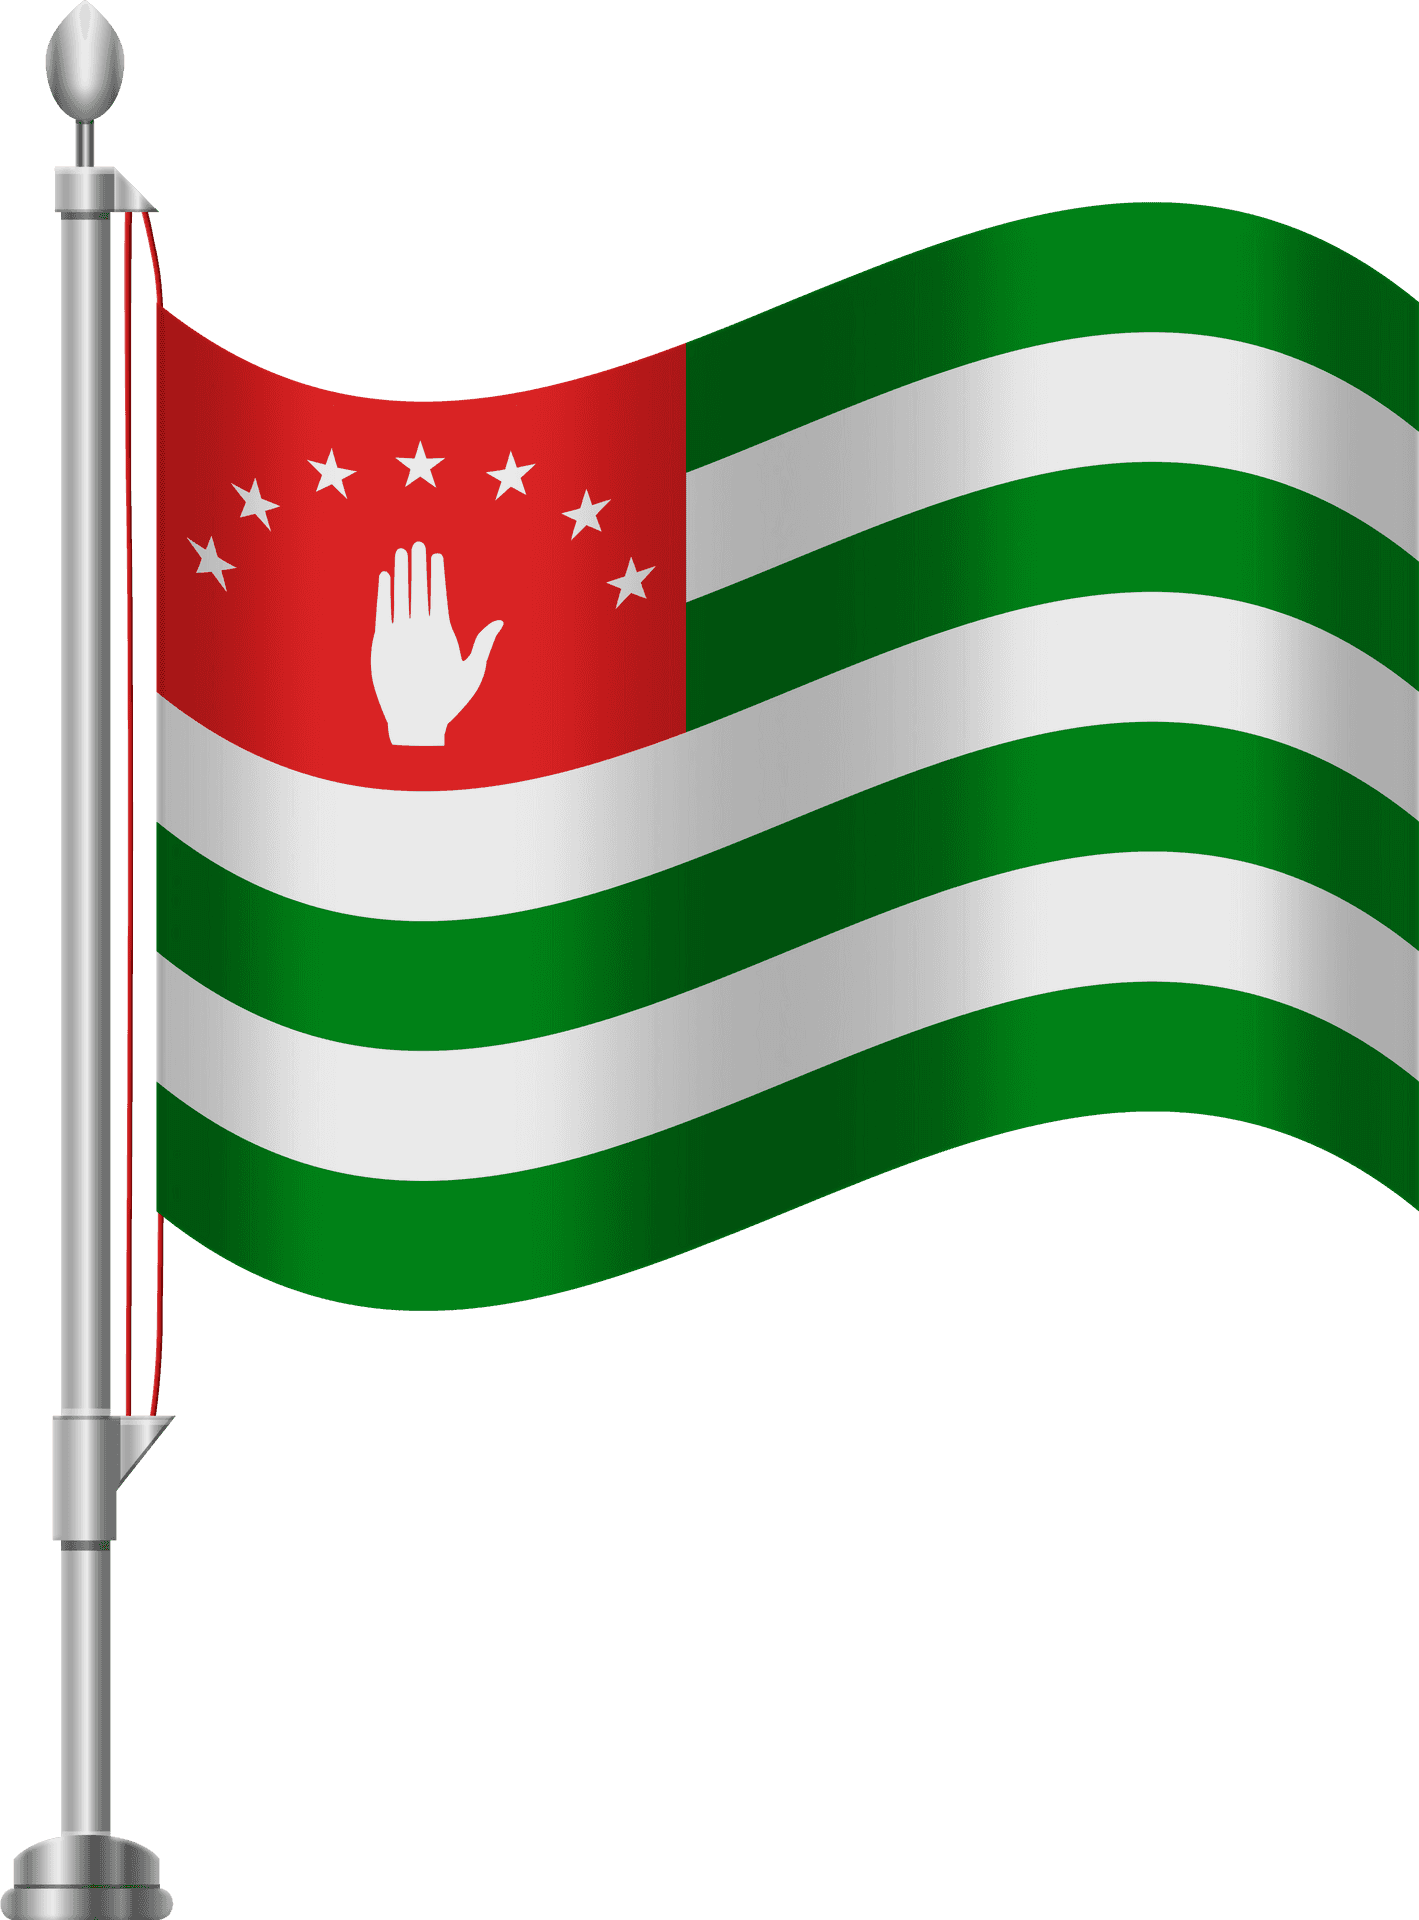 Abkhazia Flagon Pole PNG image